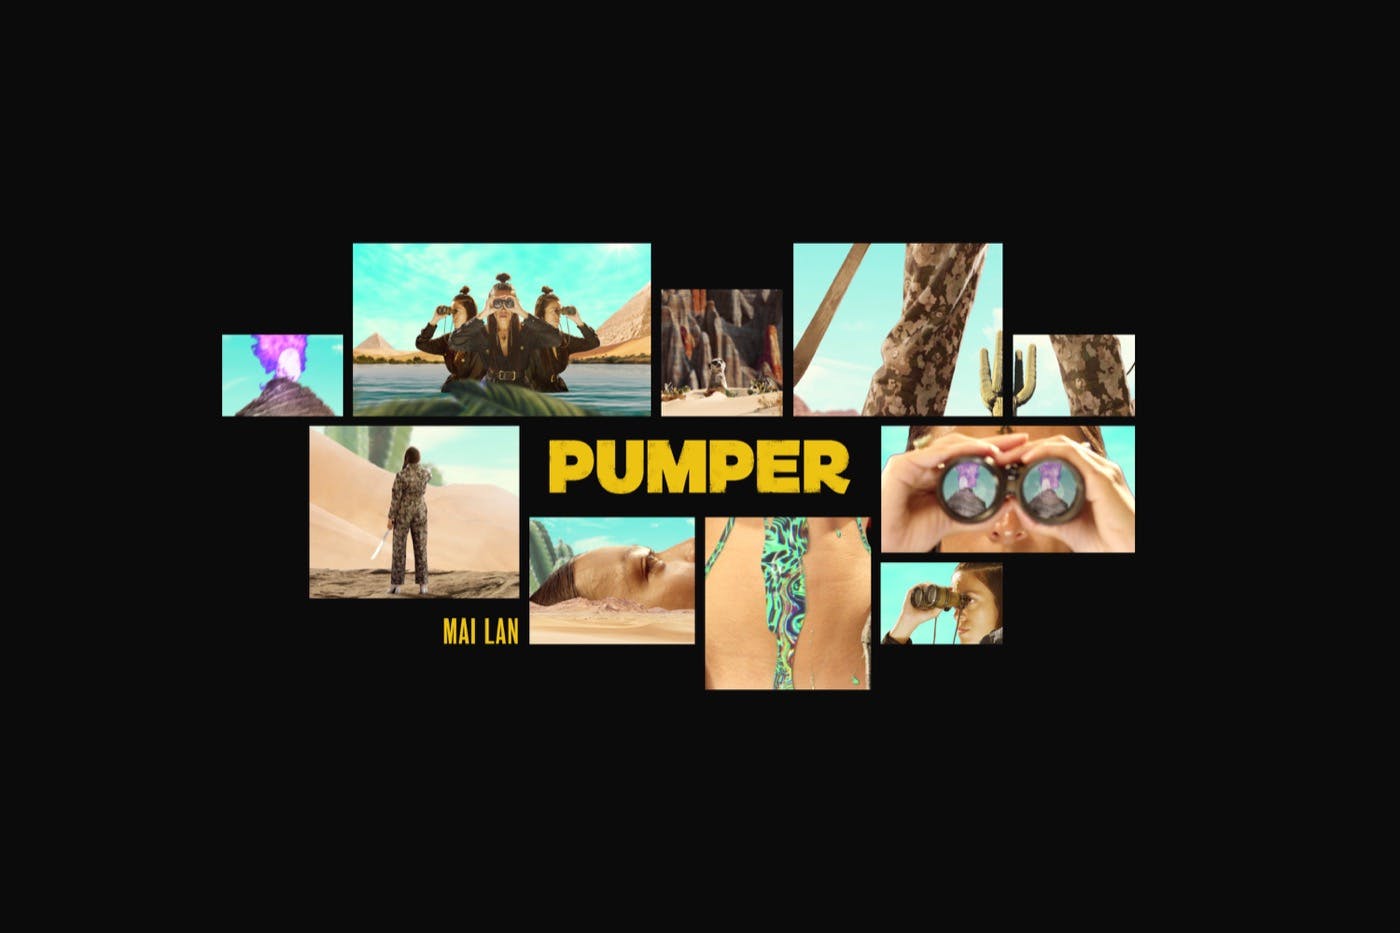 Mai Lan, Pumper — Music video
